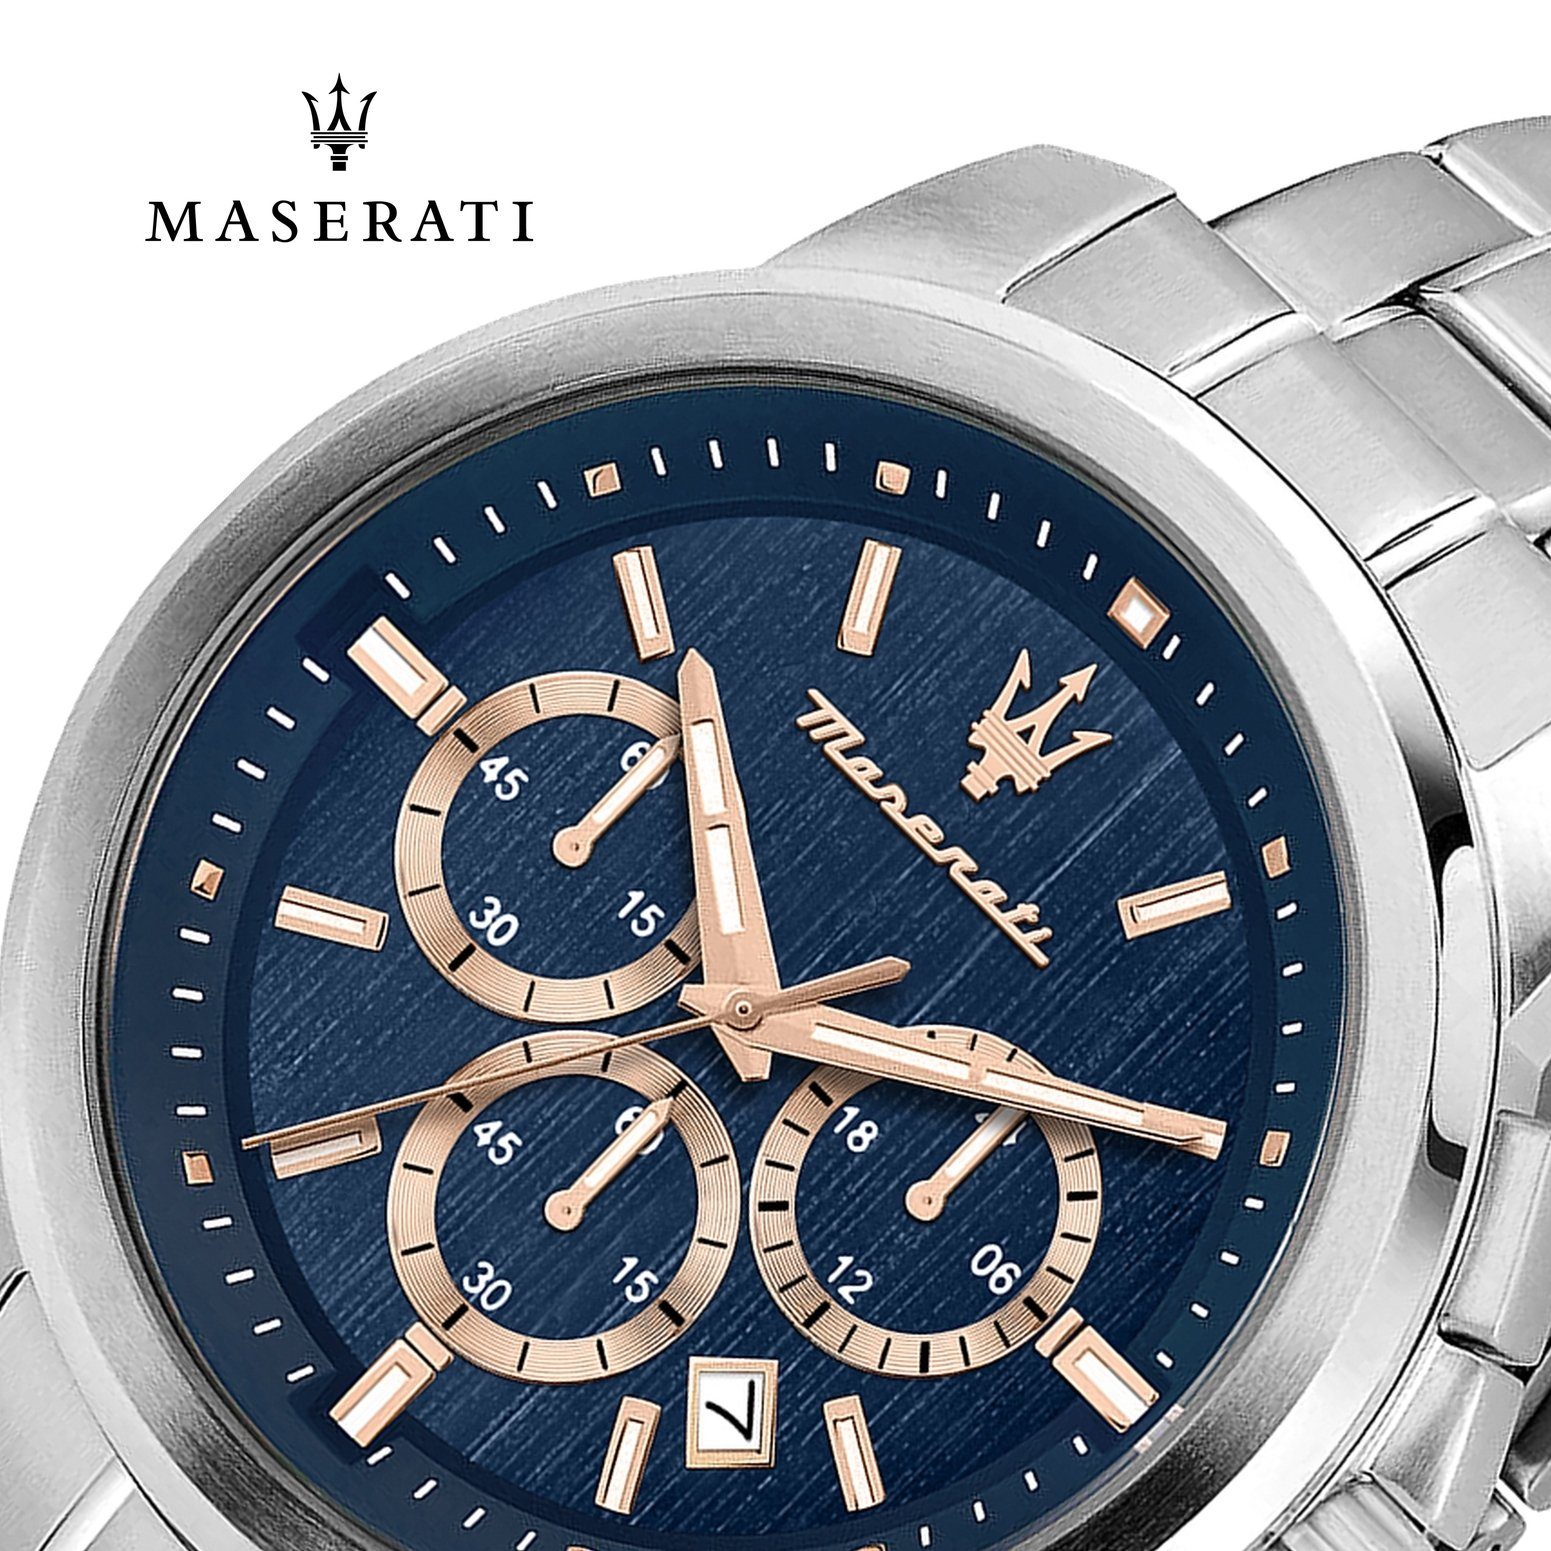 MASERATI Chronograph Maserati Chrono, Herrenuhr Herrenuhr groß Italy Successo silber blau, rund, roségold, 44mm) Made-In (ca. Edelstahlarmband